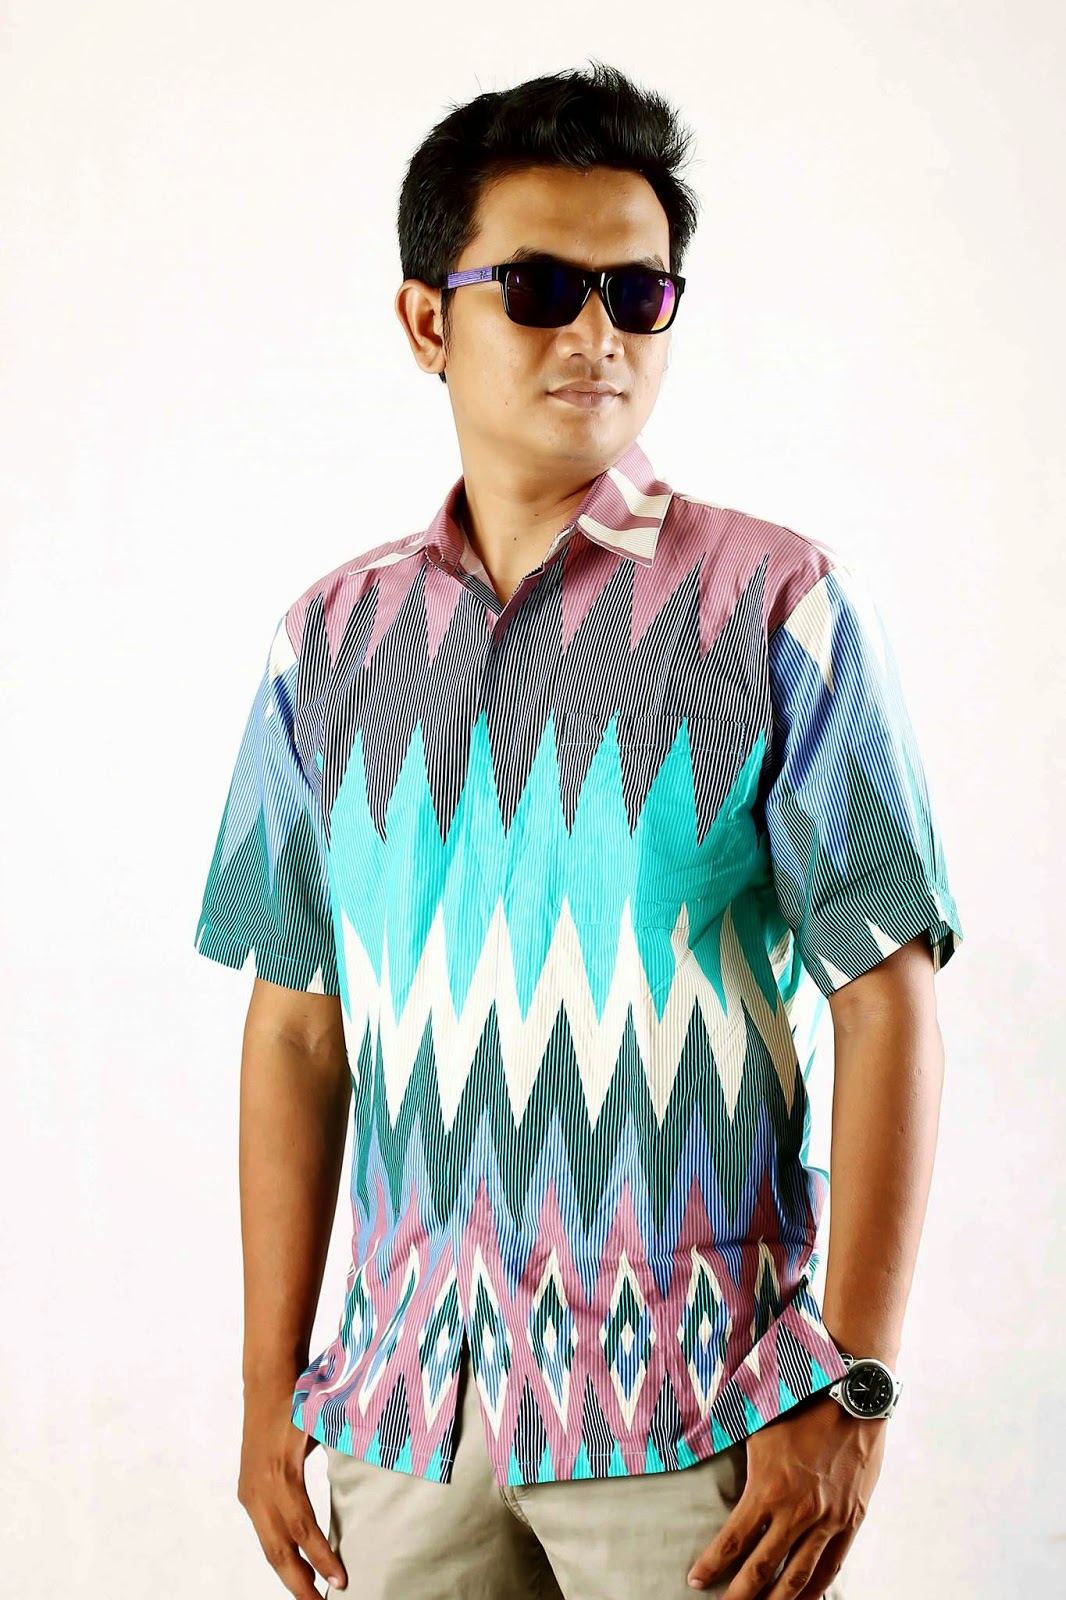  Model  Baju Kemeja  Batik  Motif Rang rang Batik  Bagoes Solo